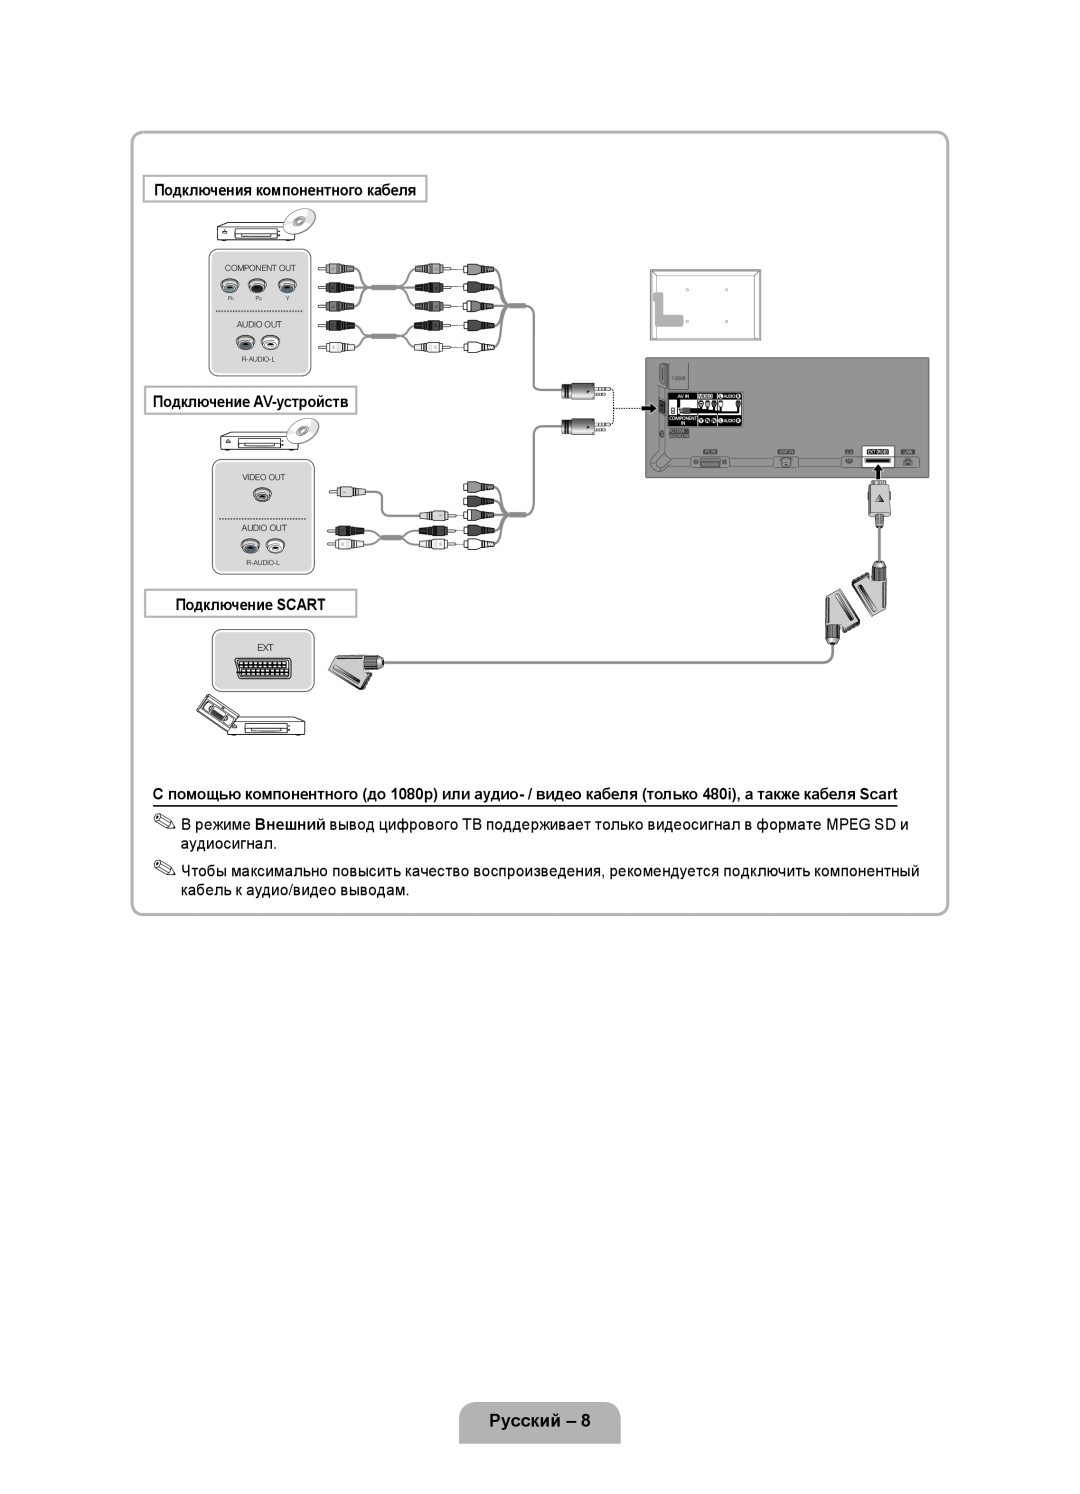 Samsung UE40D5000PWXZG manual Русский, Подключения компонентного кабеля, Подключение AV-устройств, Подключение SCART 